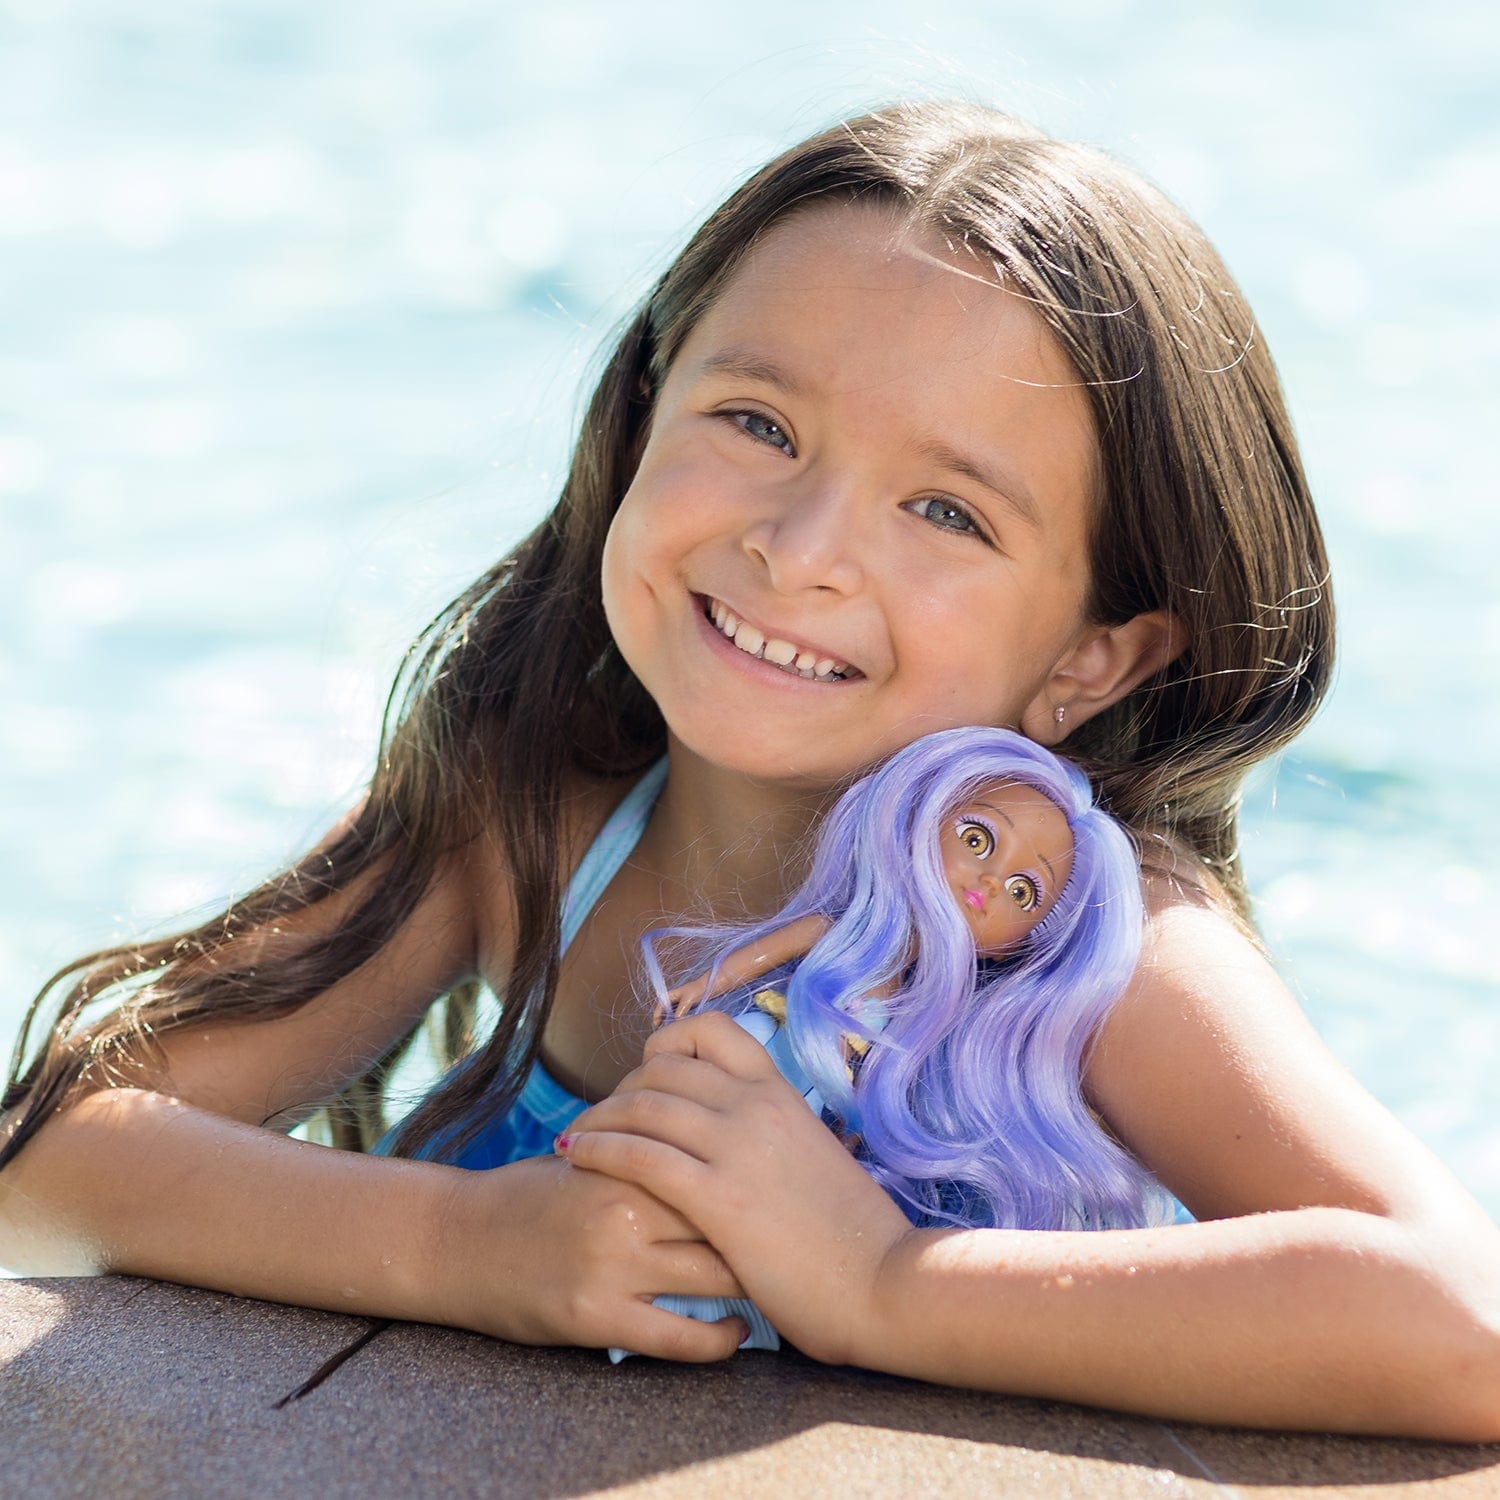  Barbie Dreamtopia Mermaid Doll (Purple Hair) With Blue